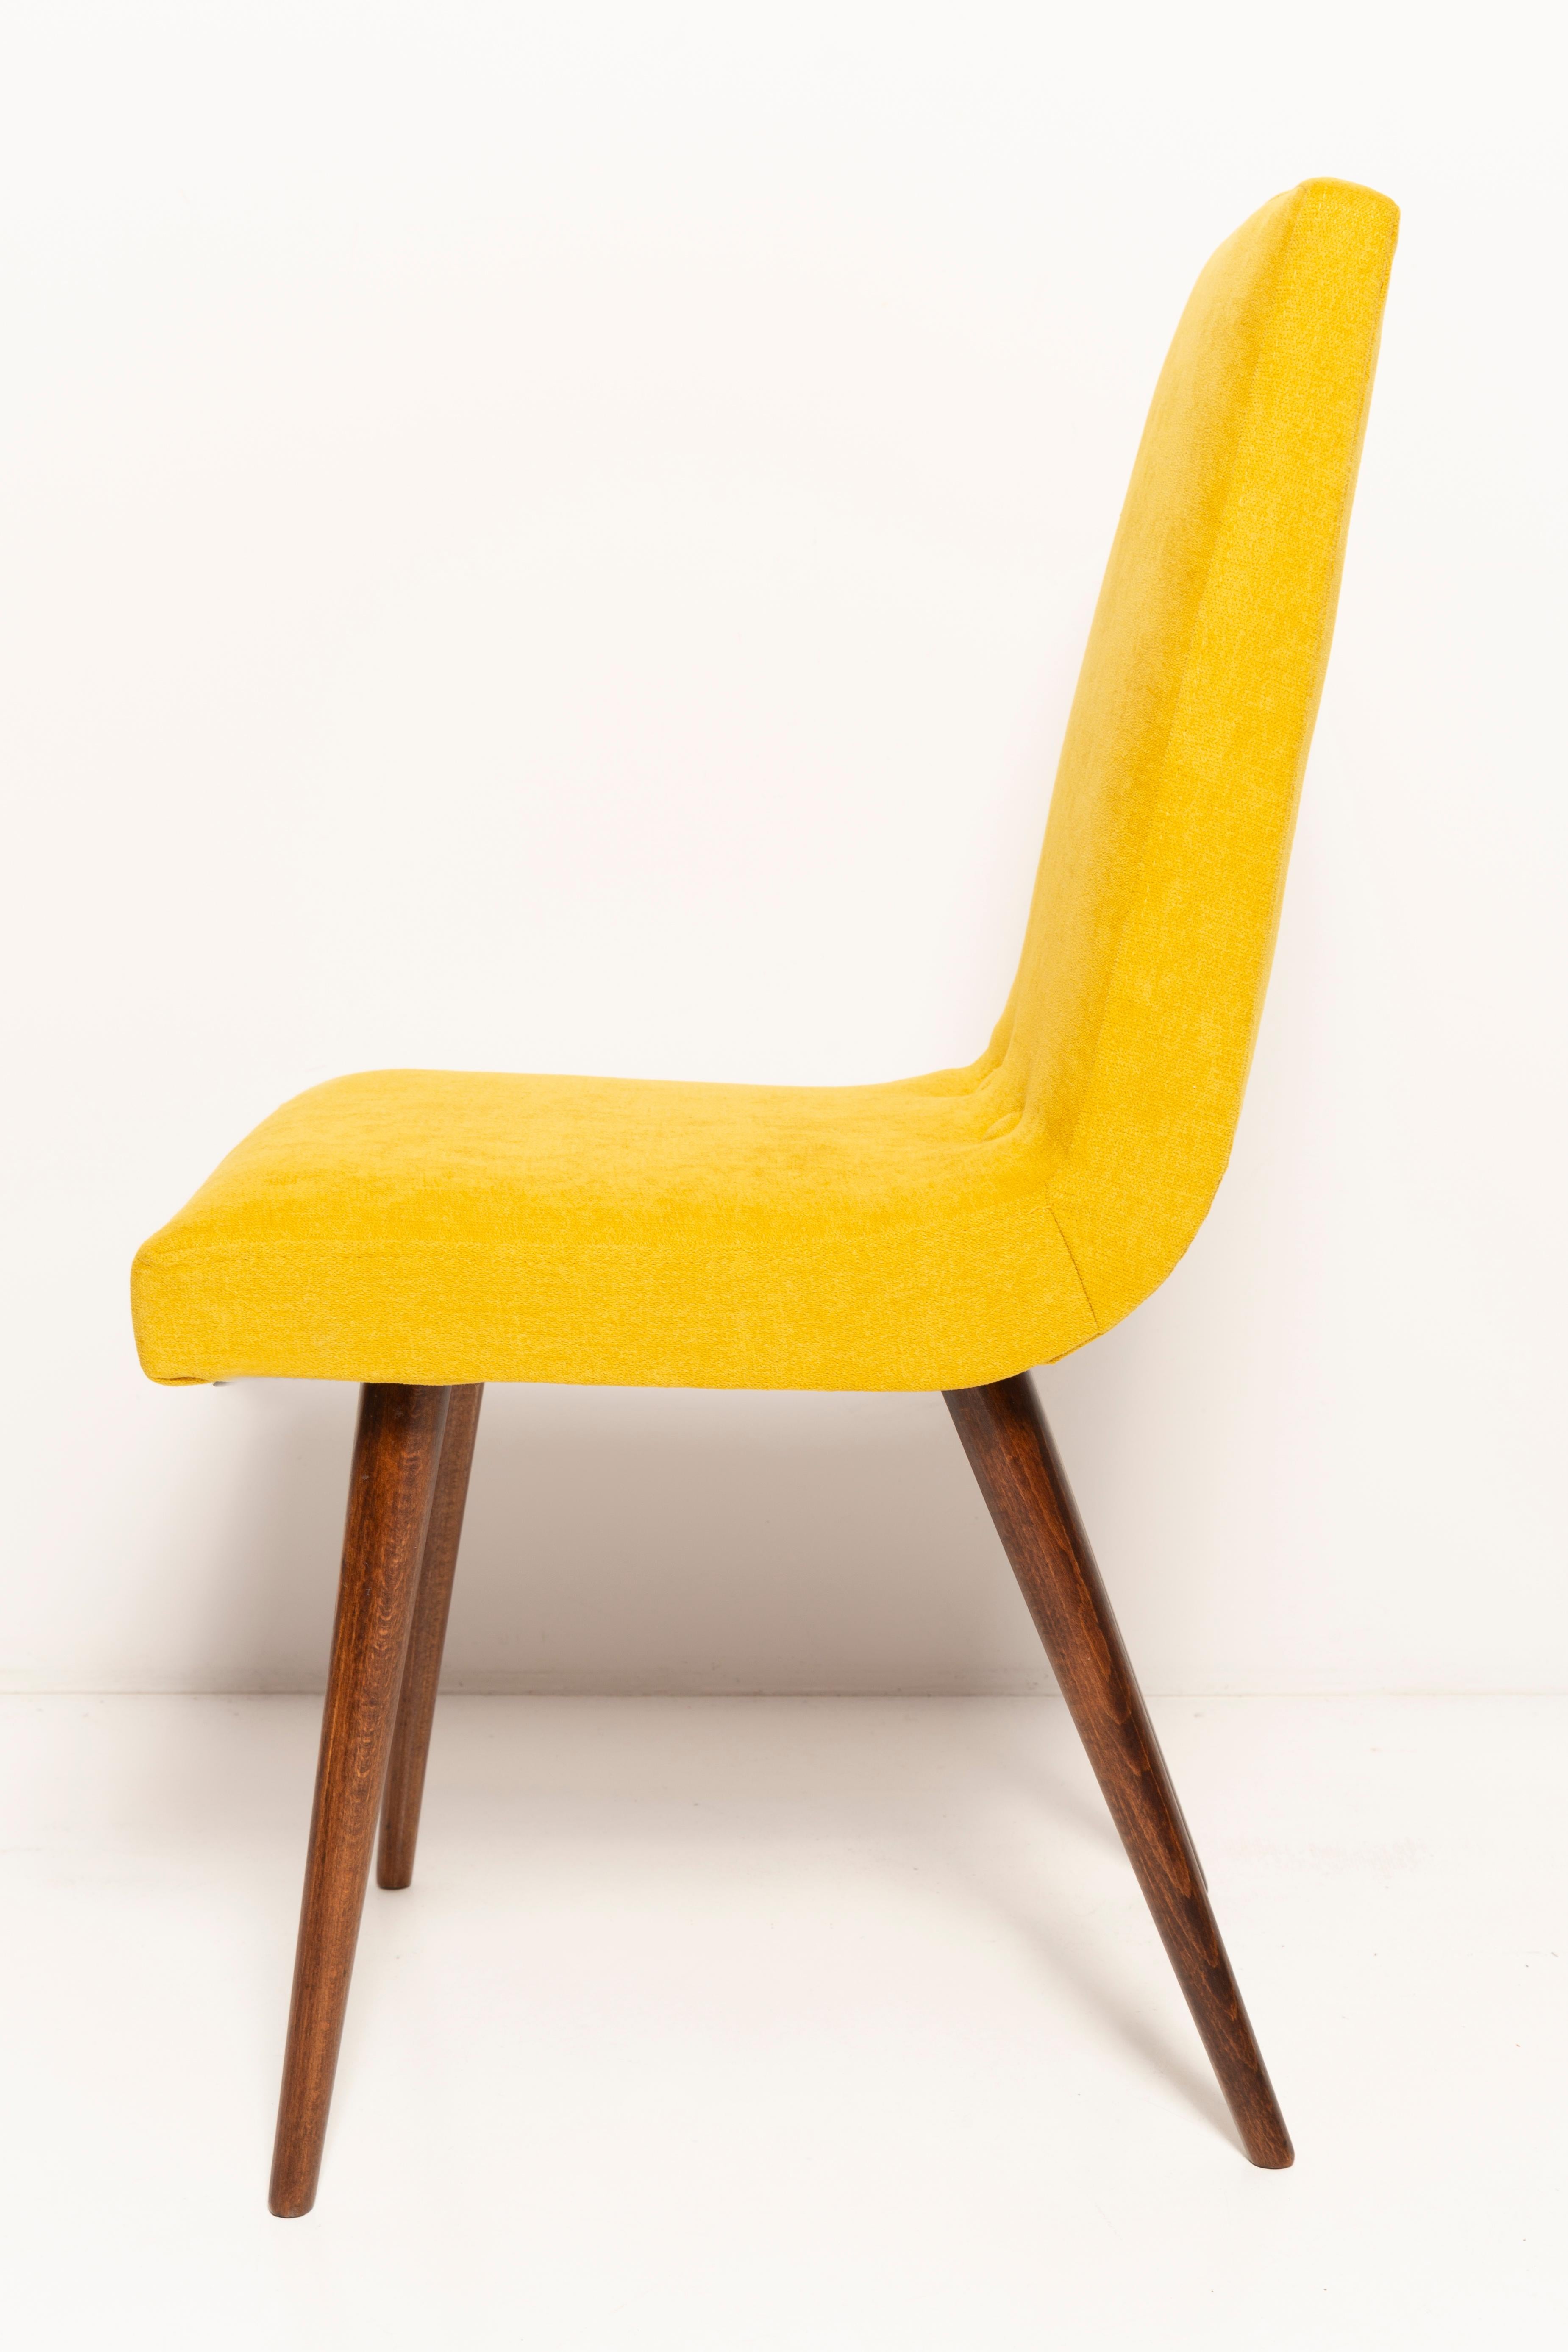 20th Century Mustard Yellow Wool Chair, Rajmund Halas, Europe, 1960s For Sale 2